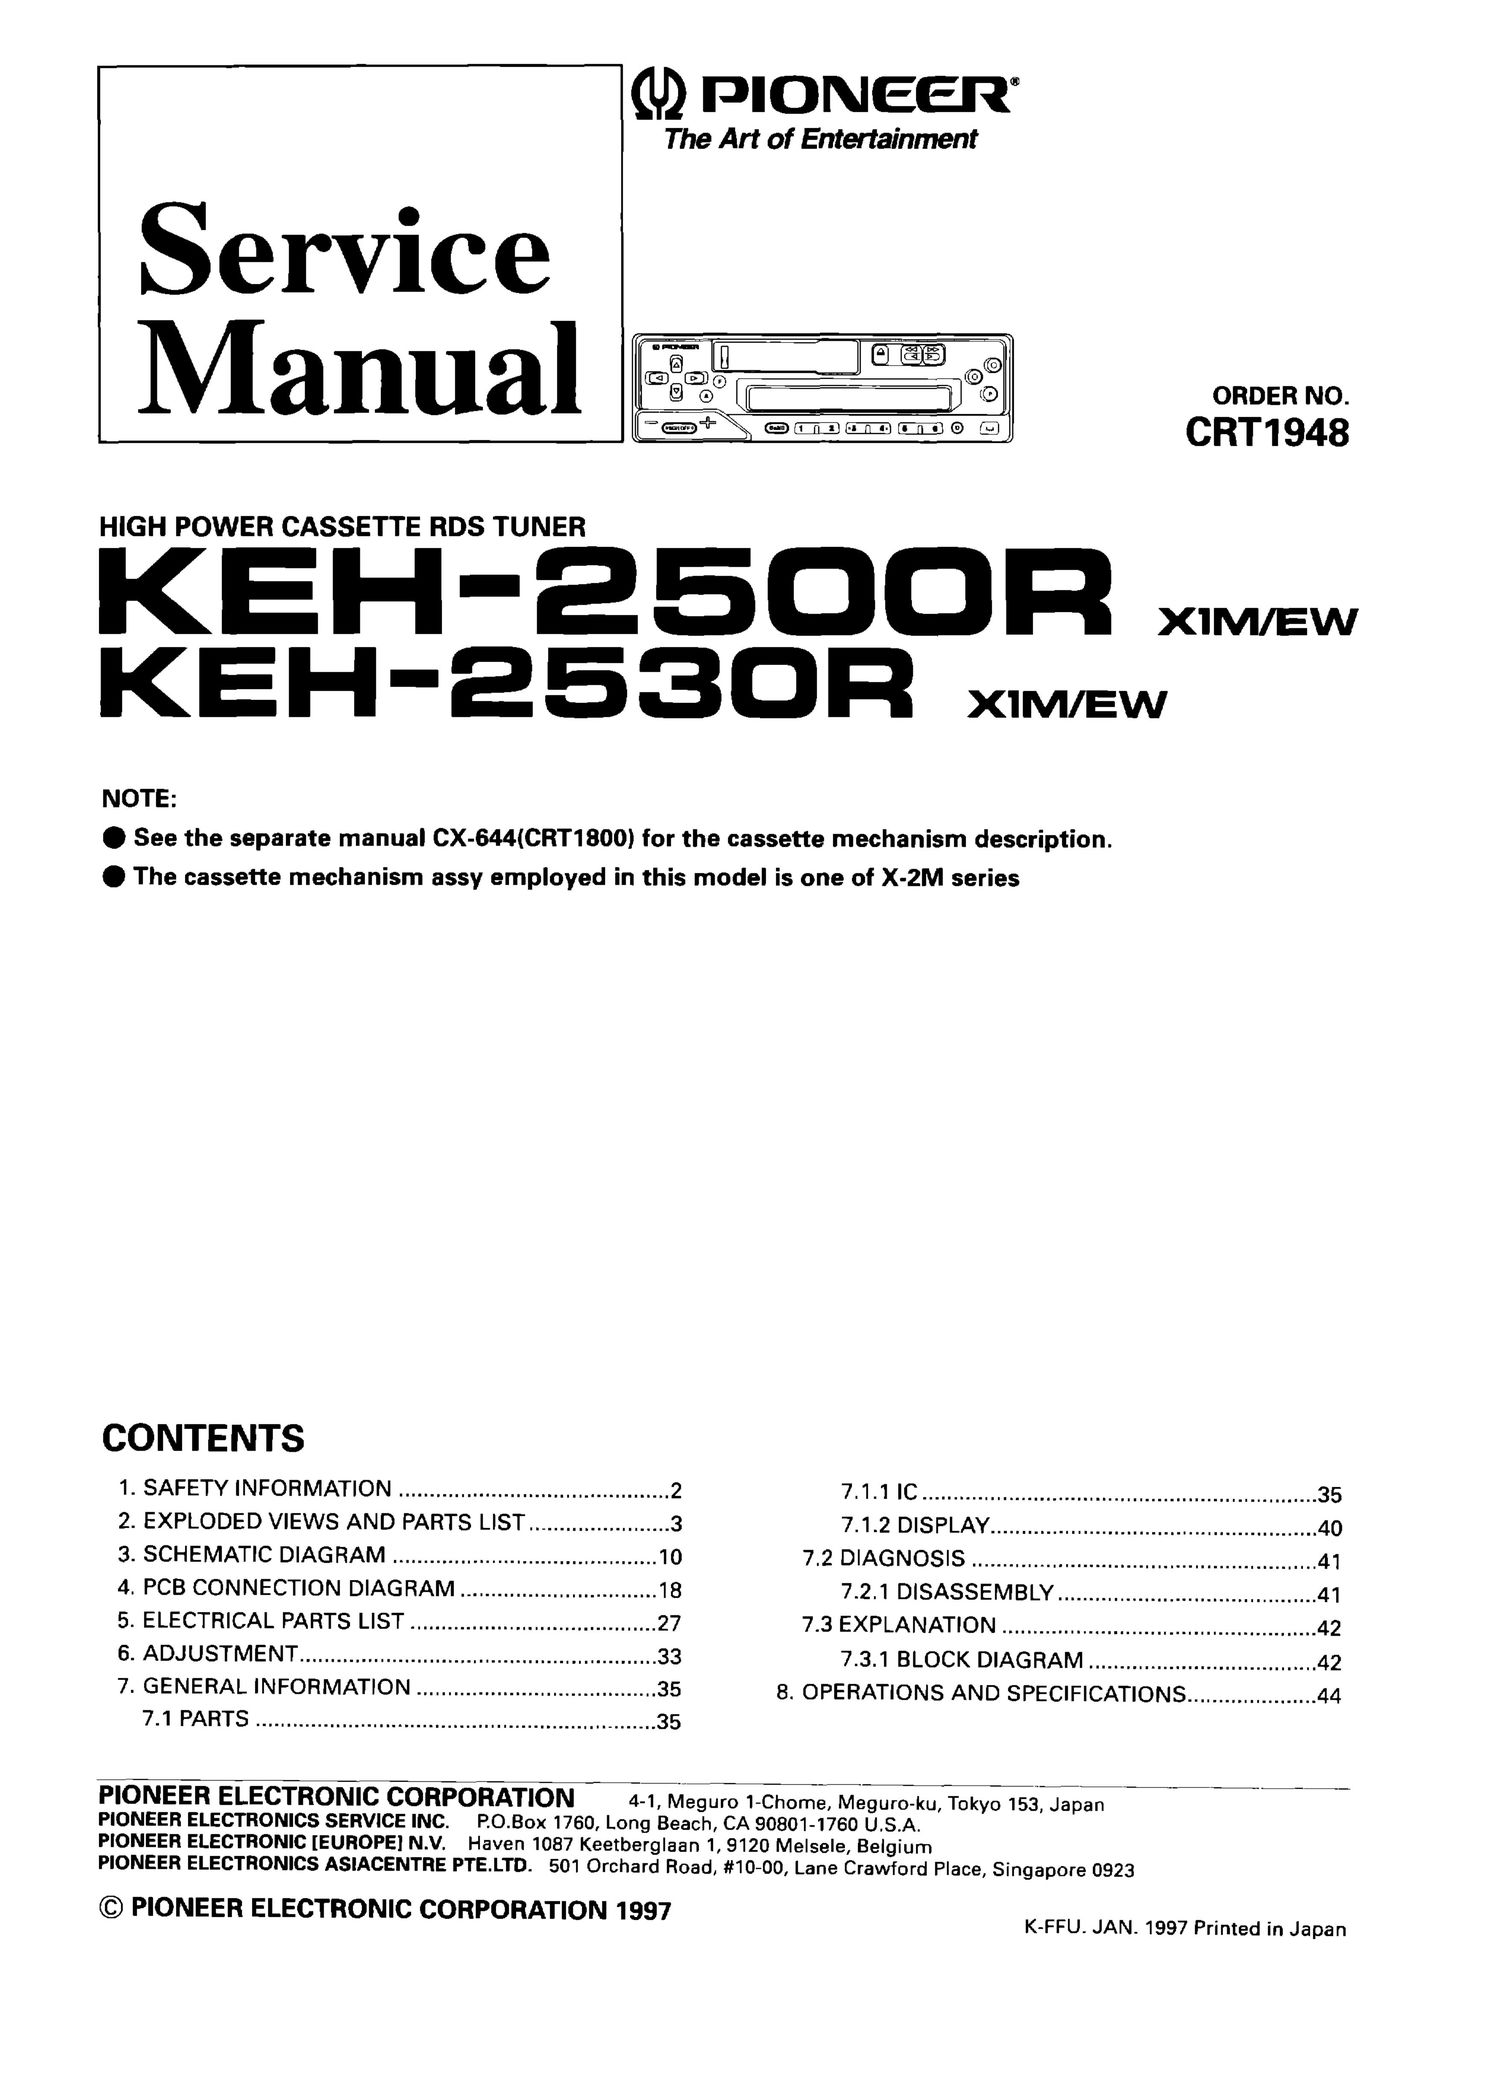 pioneer keh 2530 r service manual